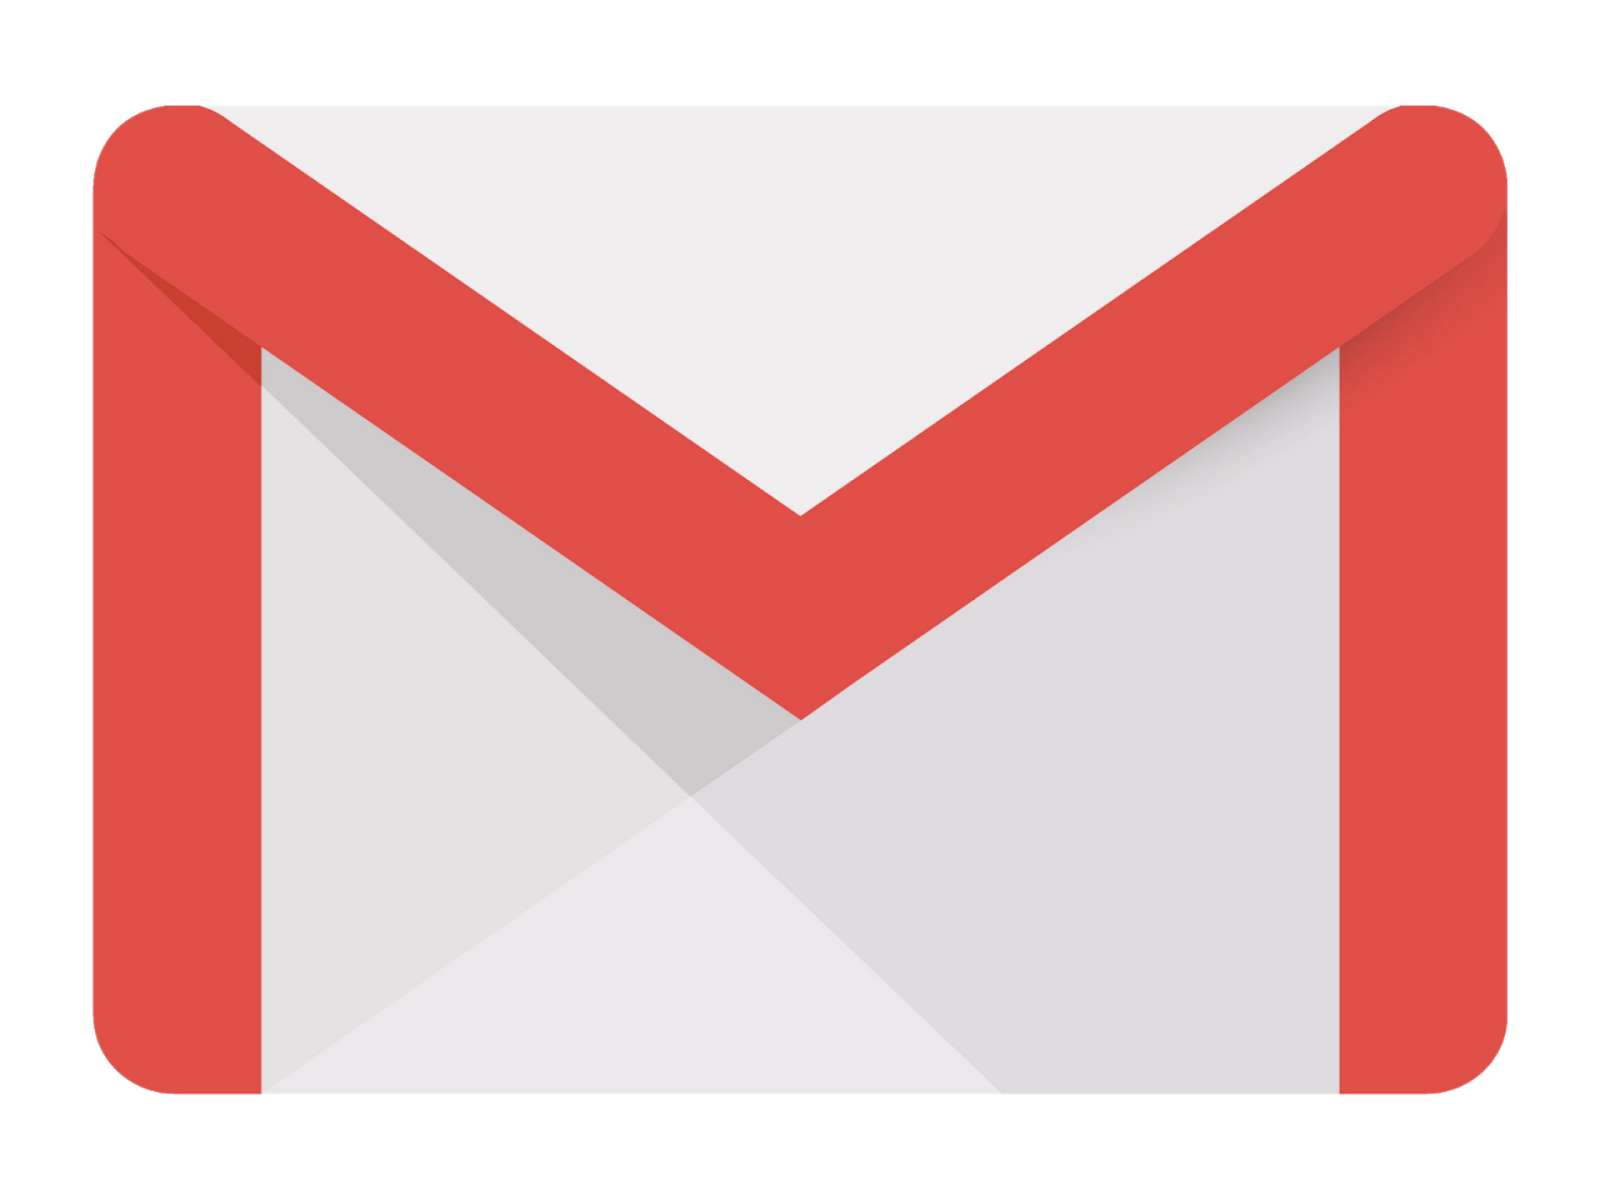 P gmail com. Gmail логотип. Gmail icon PNG. Лого mail прозрачный фон.